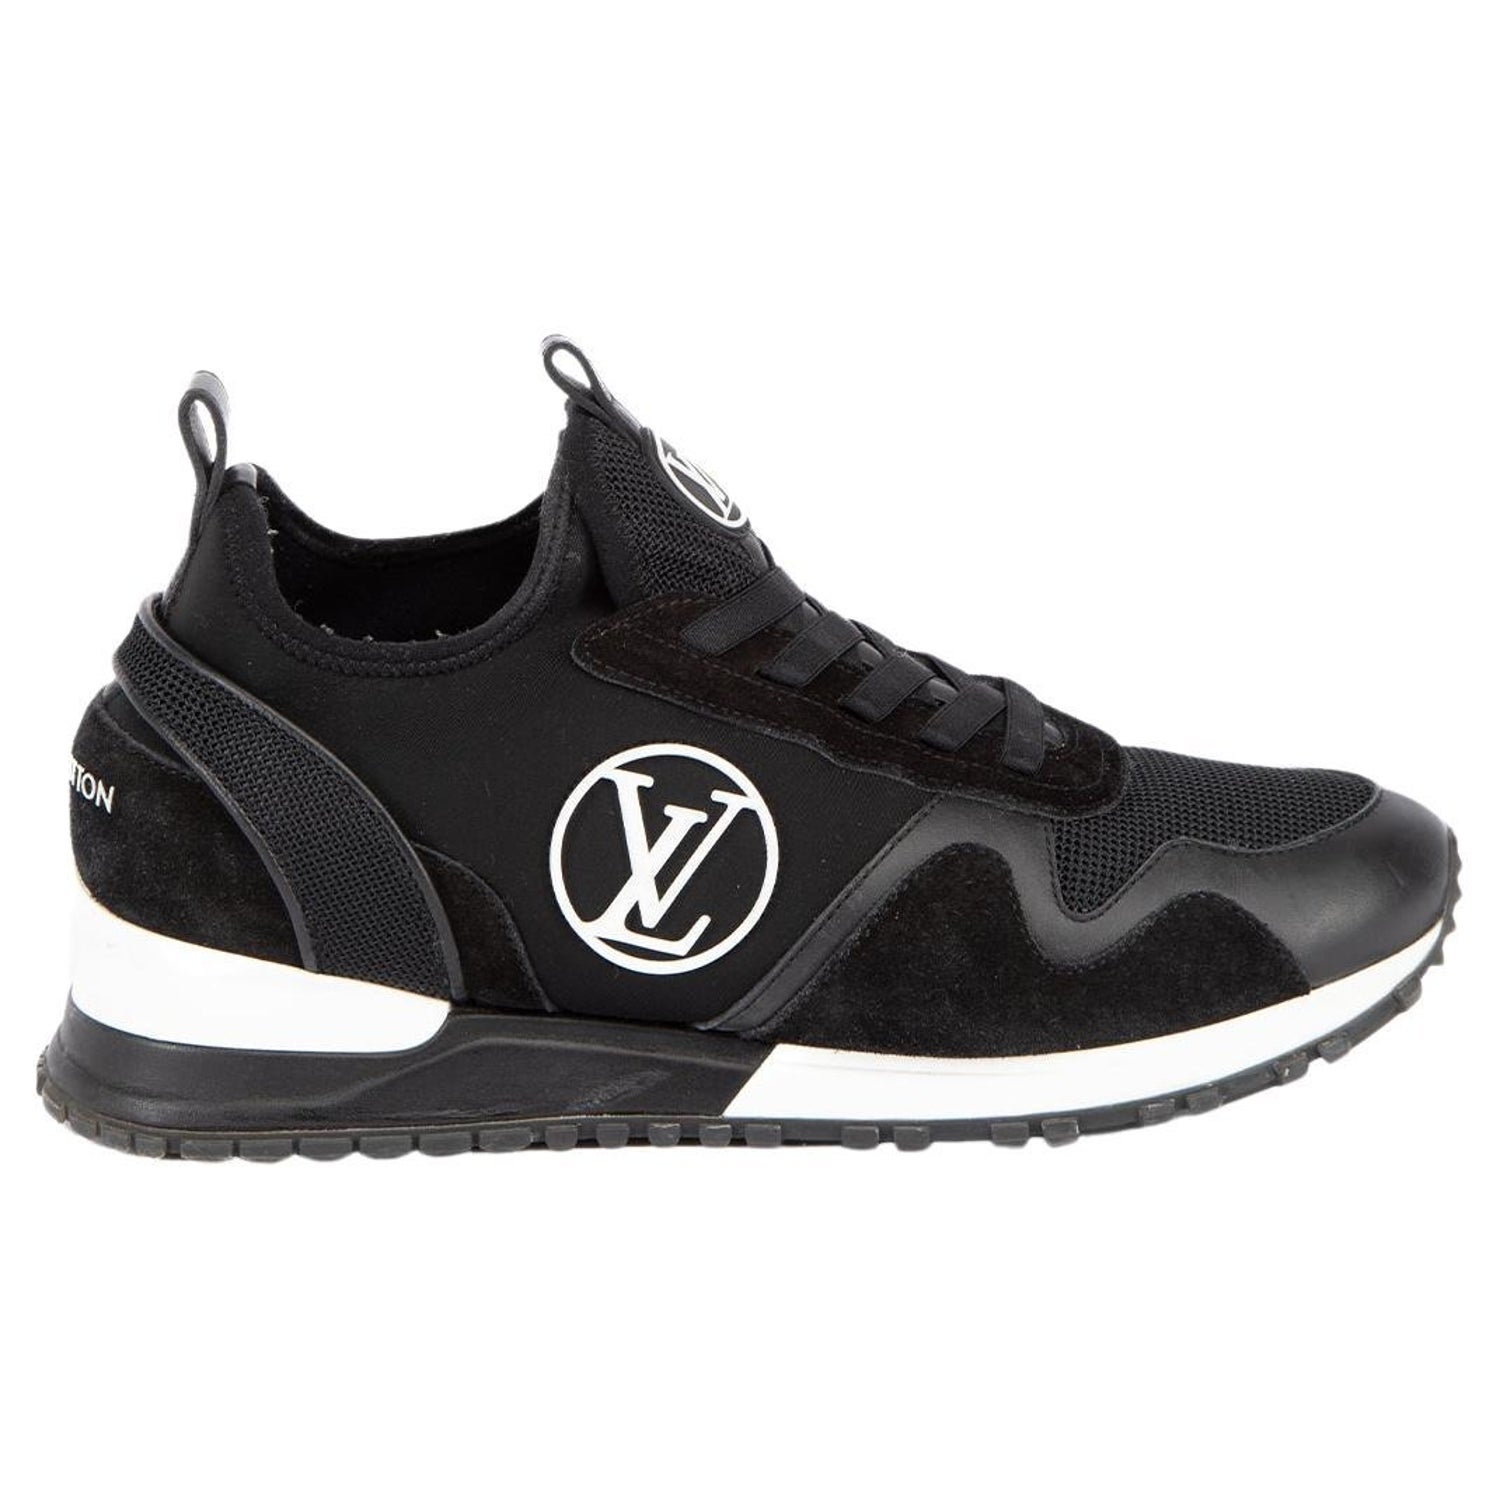 Louis Vuitton Run Away Sneaker - 19 For Sale on 1stDibs